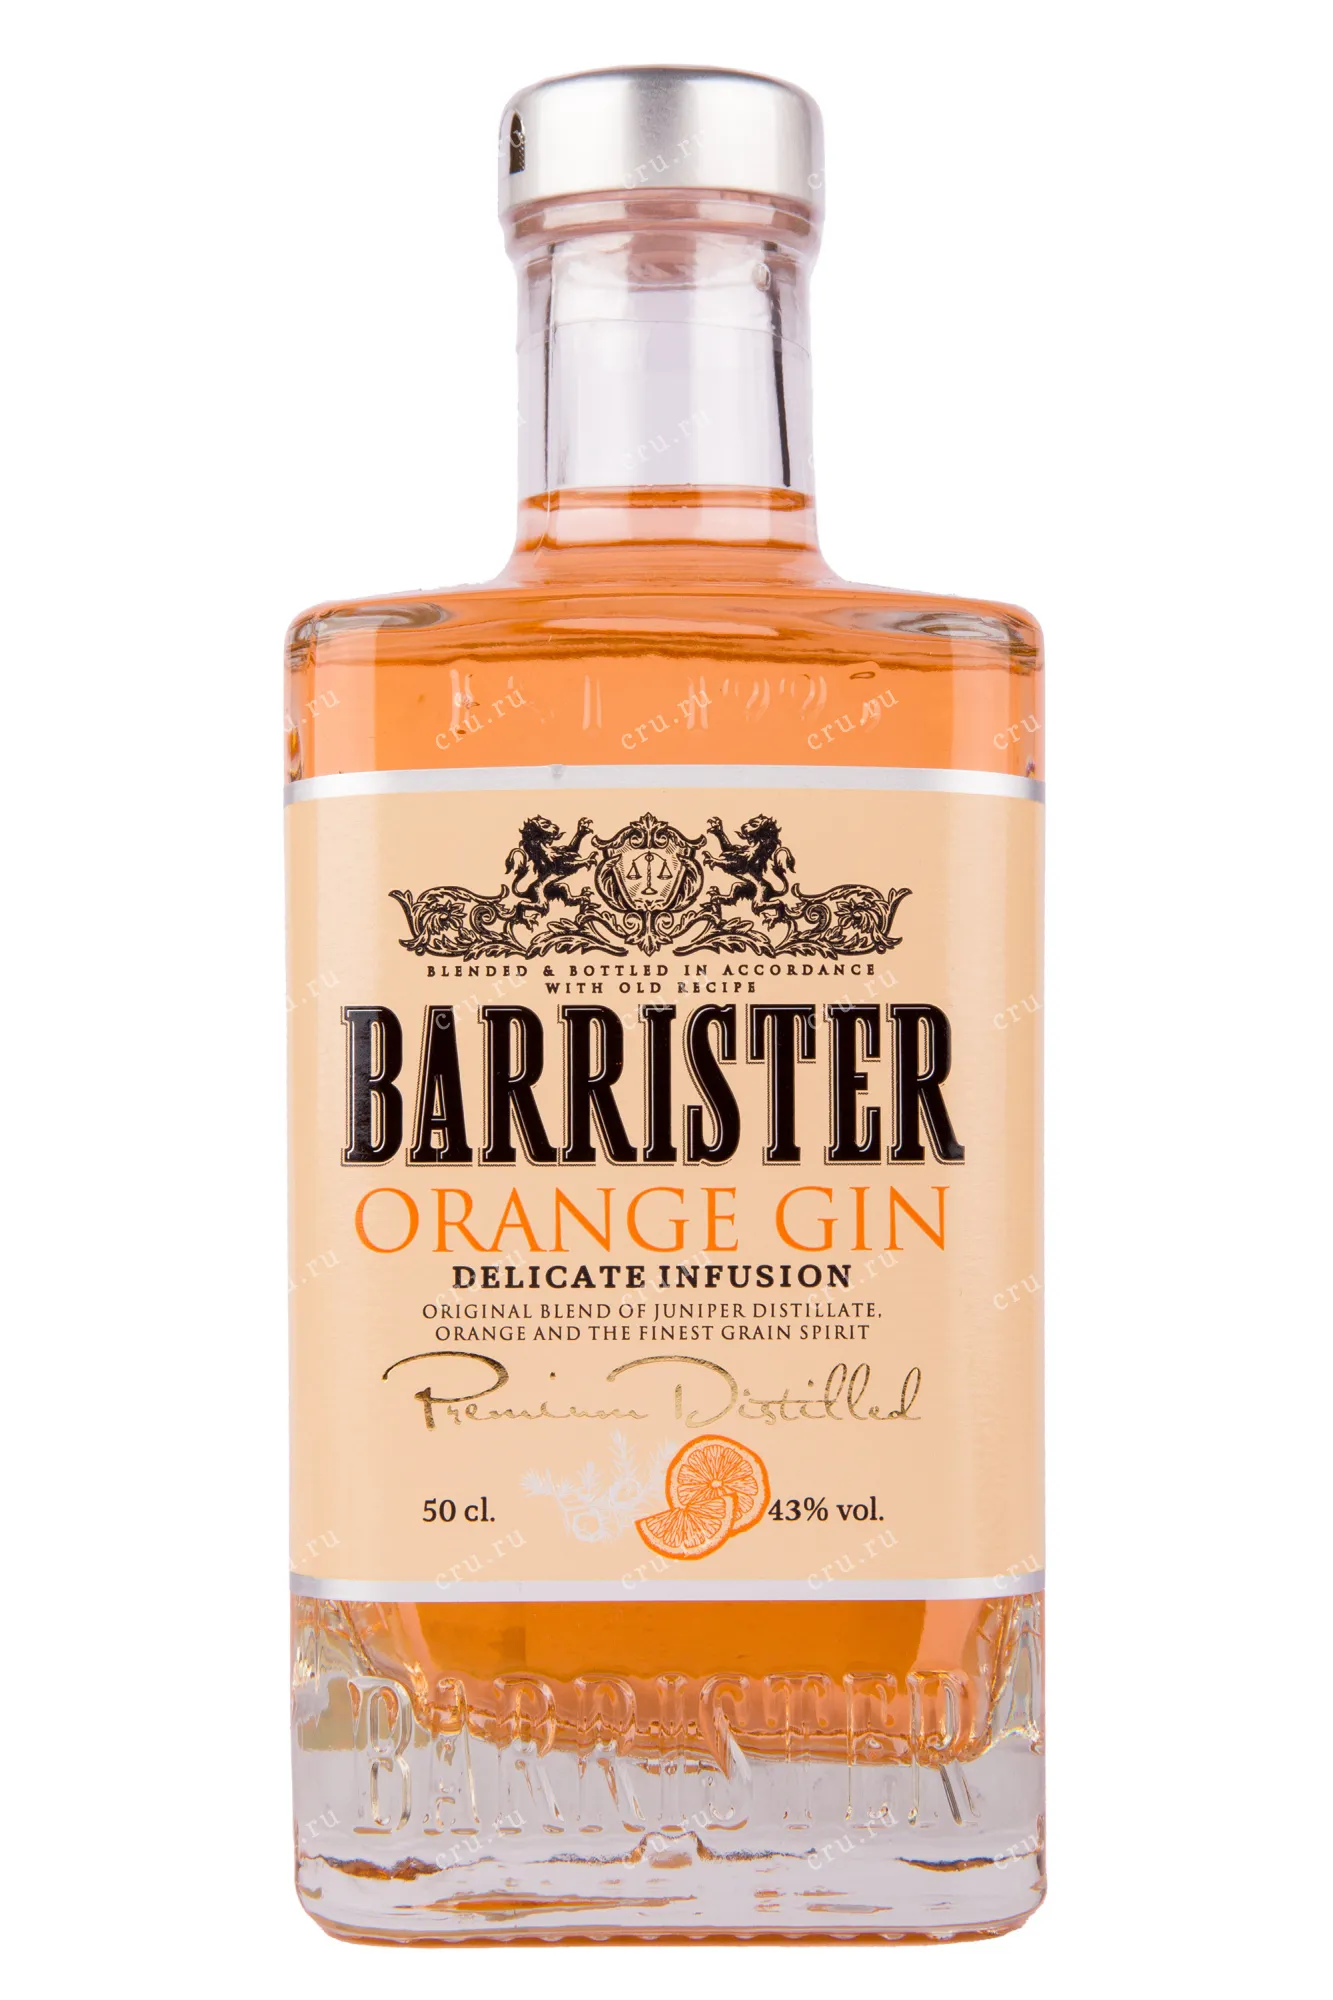 Барристер цена 0.7. Джин "Барристер оранж" 0,5 л. Джин Барристер оранж 0,5л 43%. Джин Барристер оранж 0.7. Джин Barrister Orange Gin 43% 0.7 л.